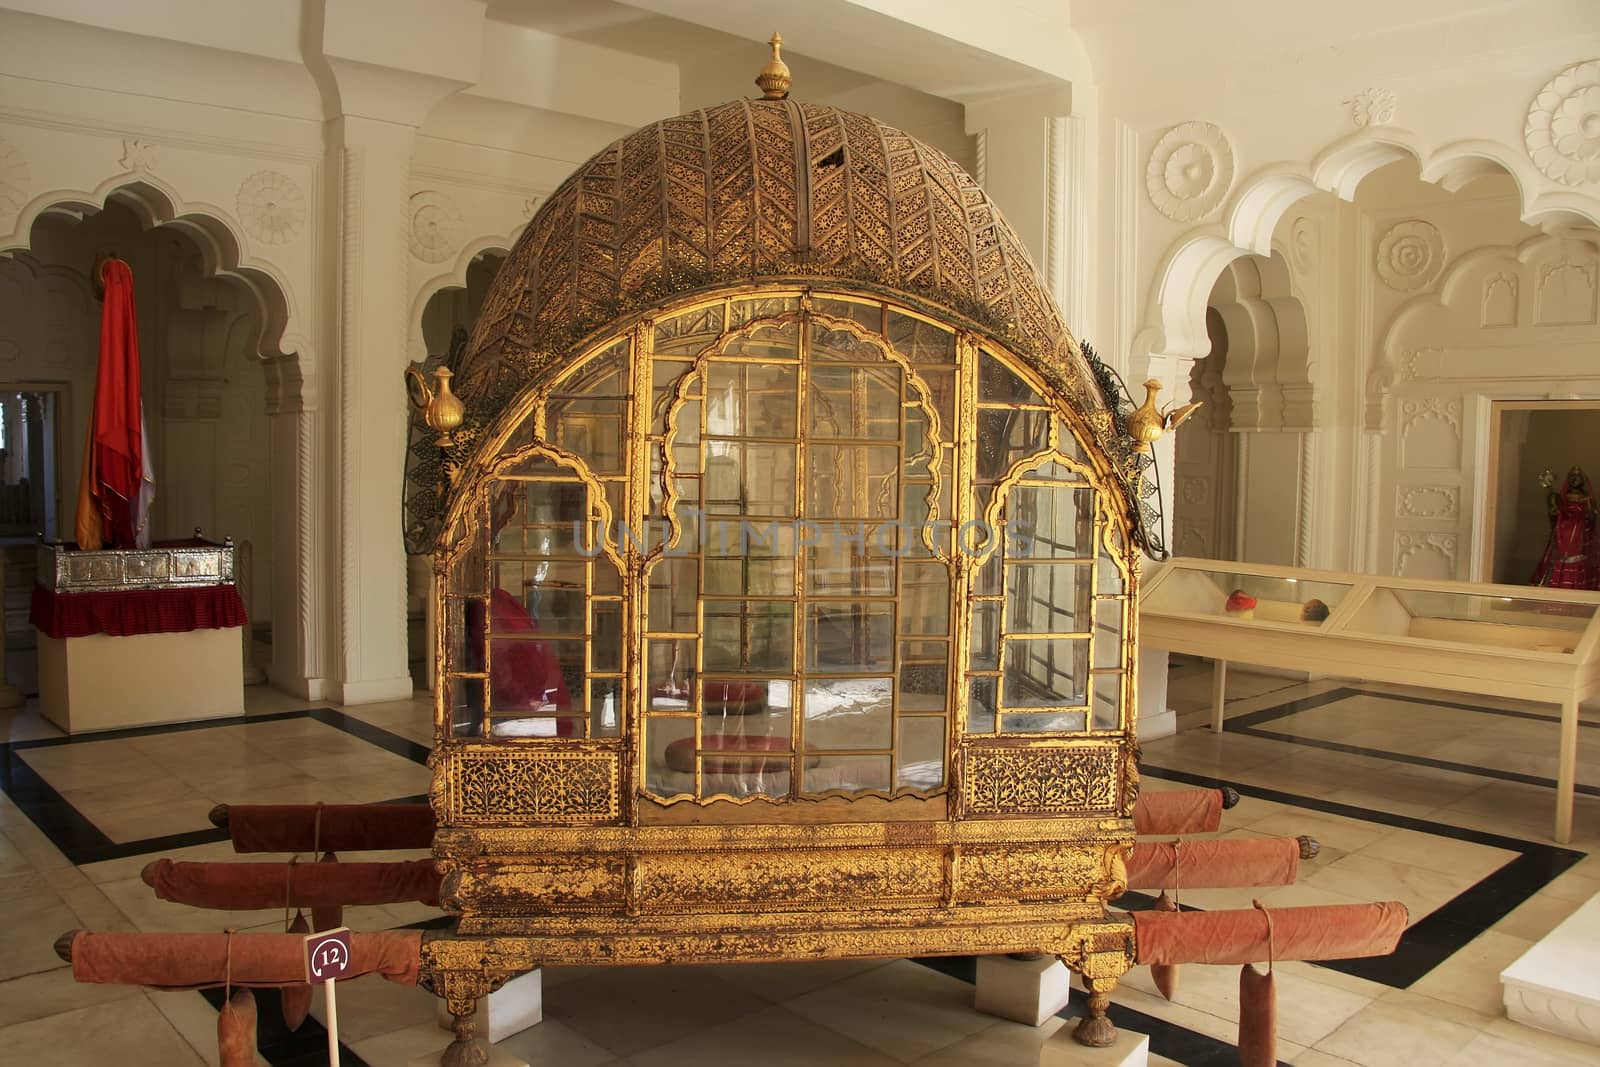 Palanquin on display at Mehrangarh Fort museum, Jodhpur, Rajasthan, India